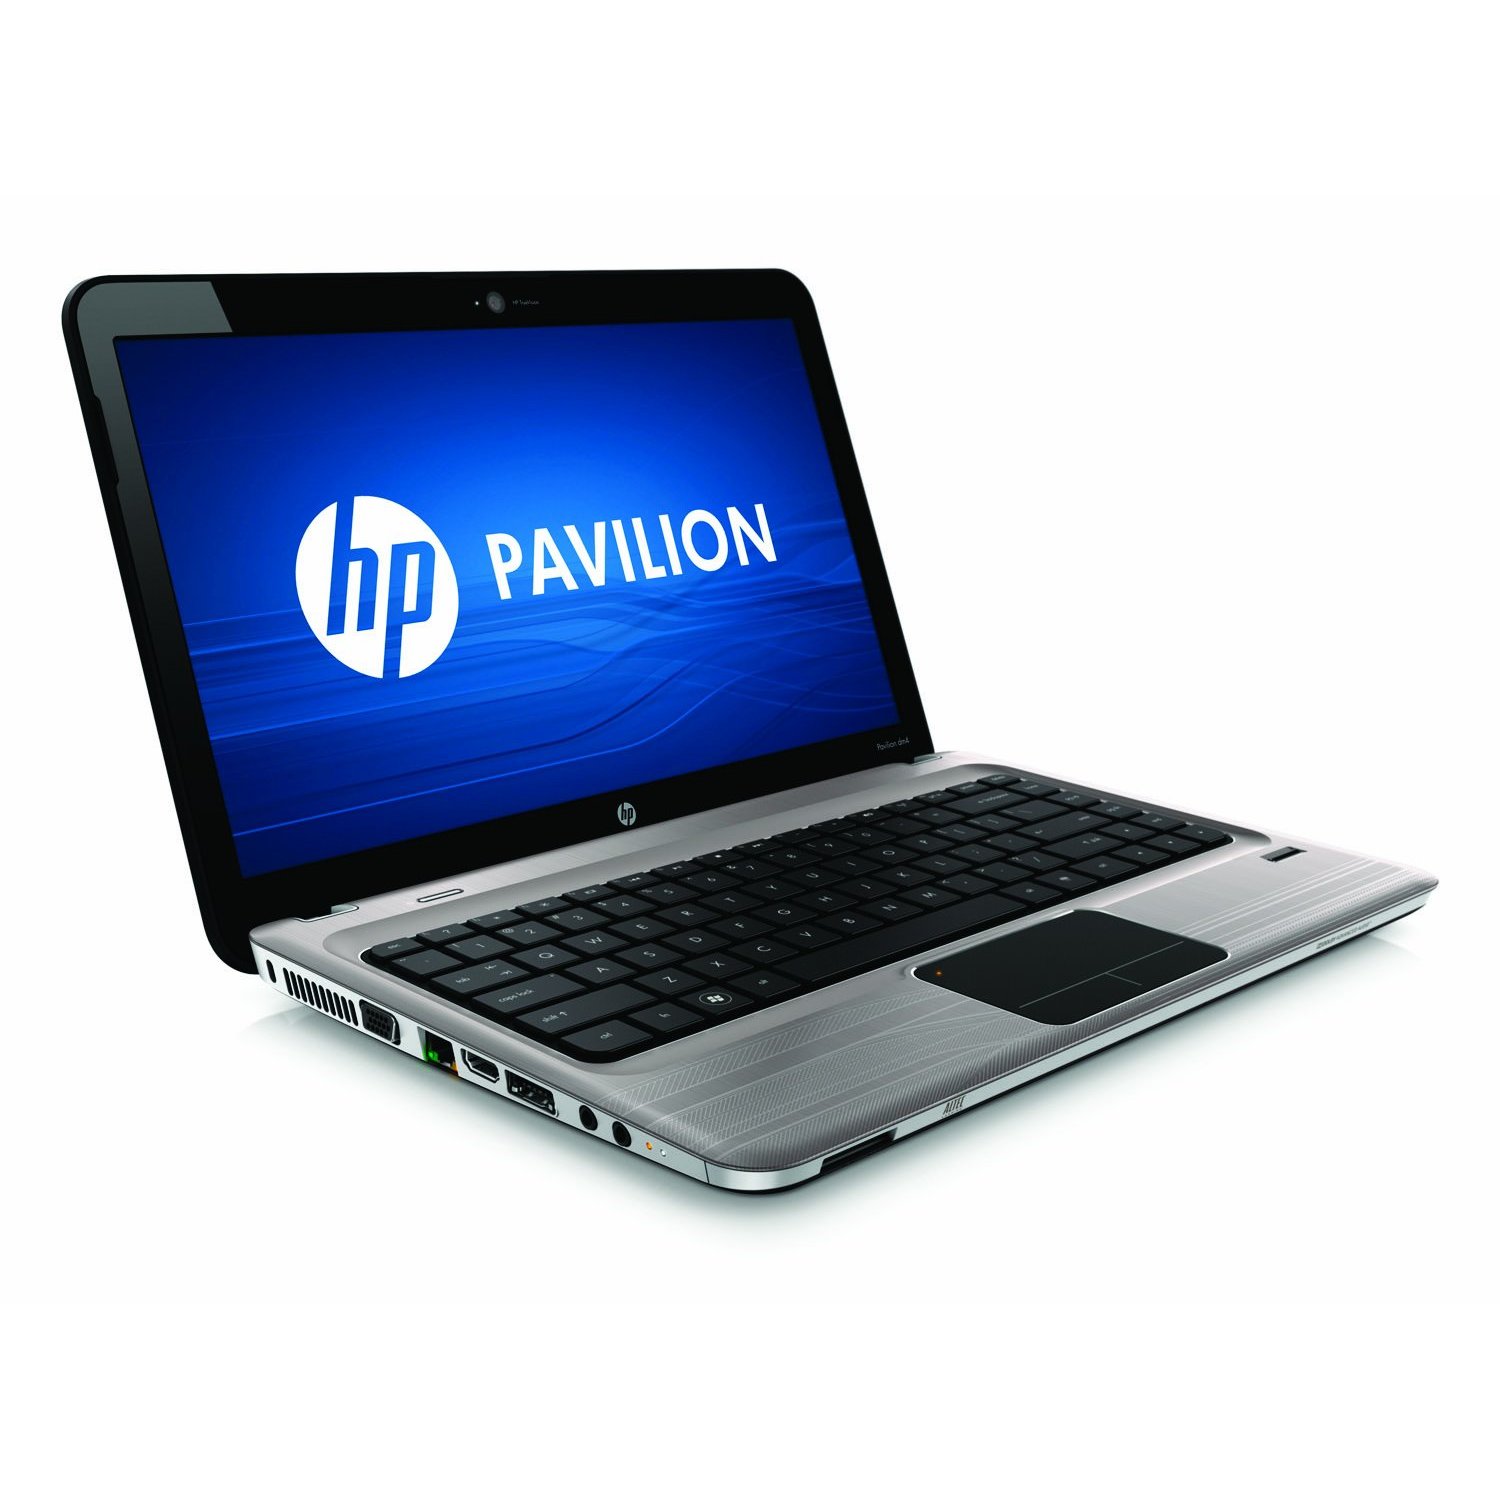 HP Pavilion dm4-2180us